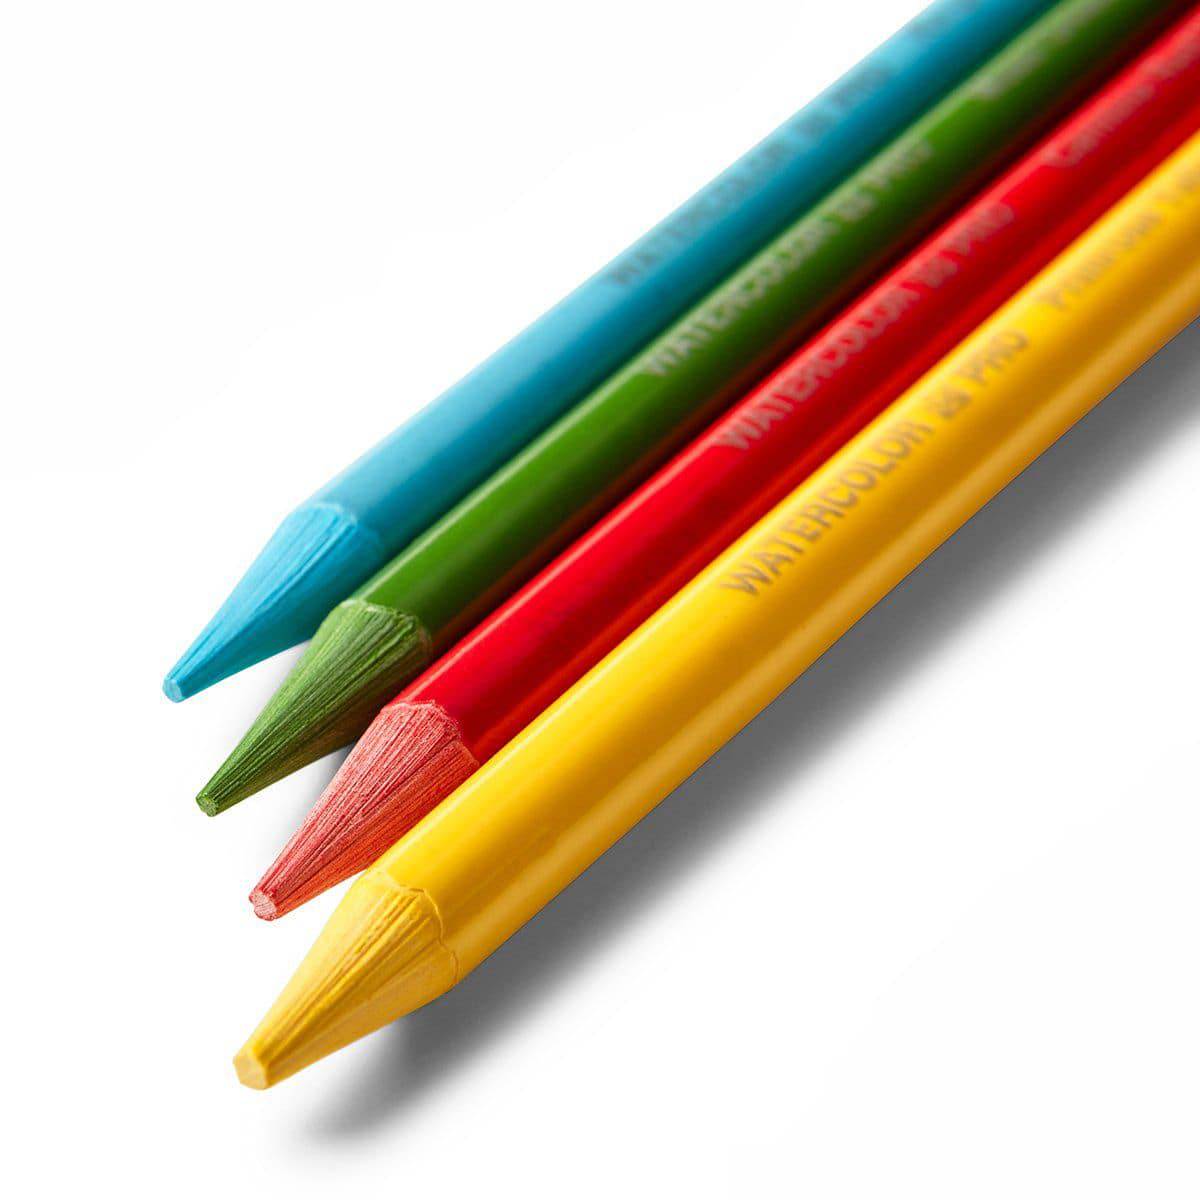 Pro Art Colored Pencils Review